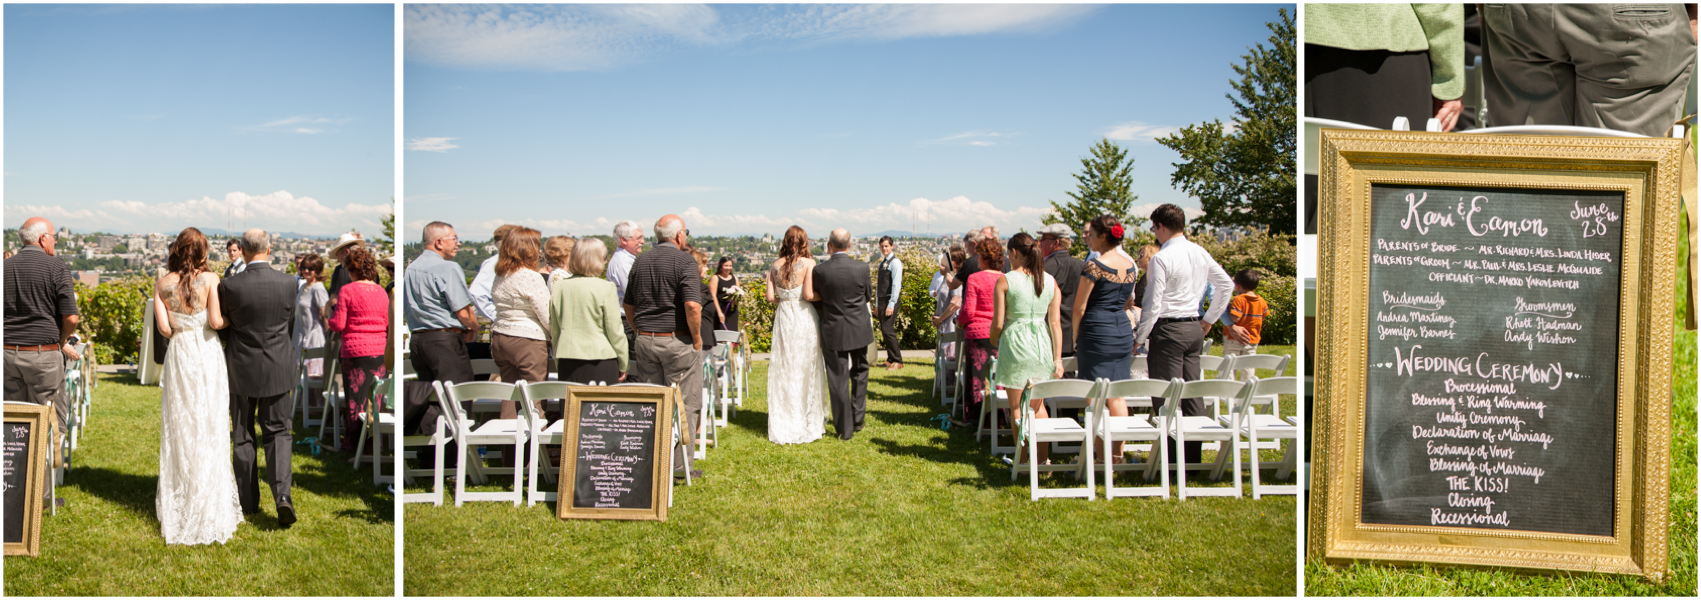 Bhy Kracke Park Wedding in Seattle Washington located on Queen Anne Hill